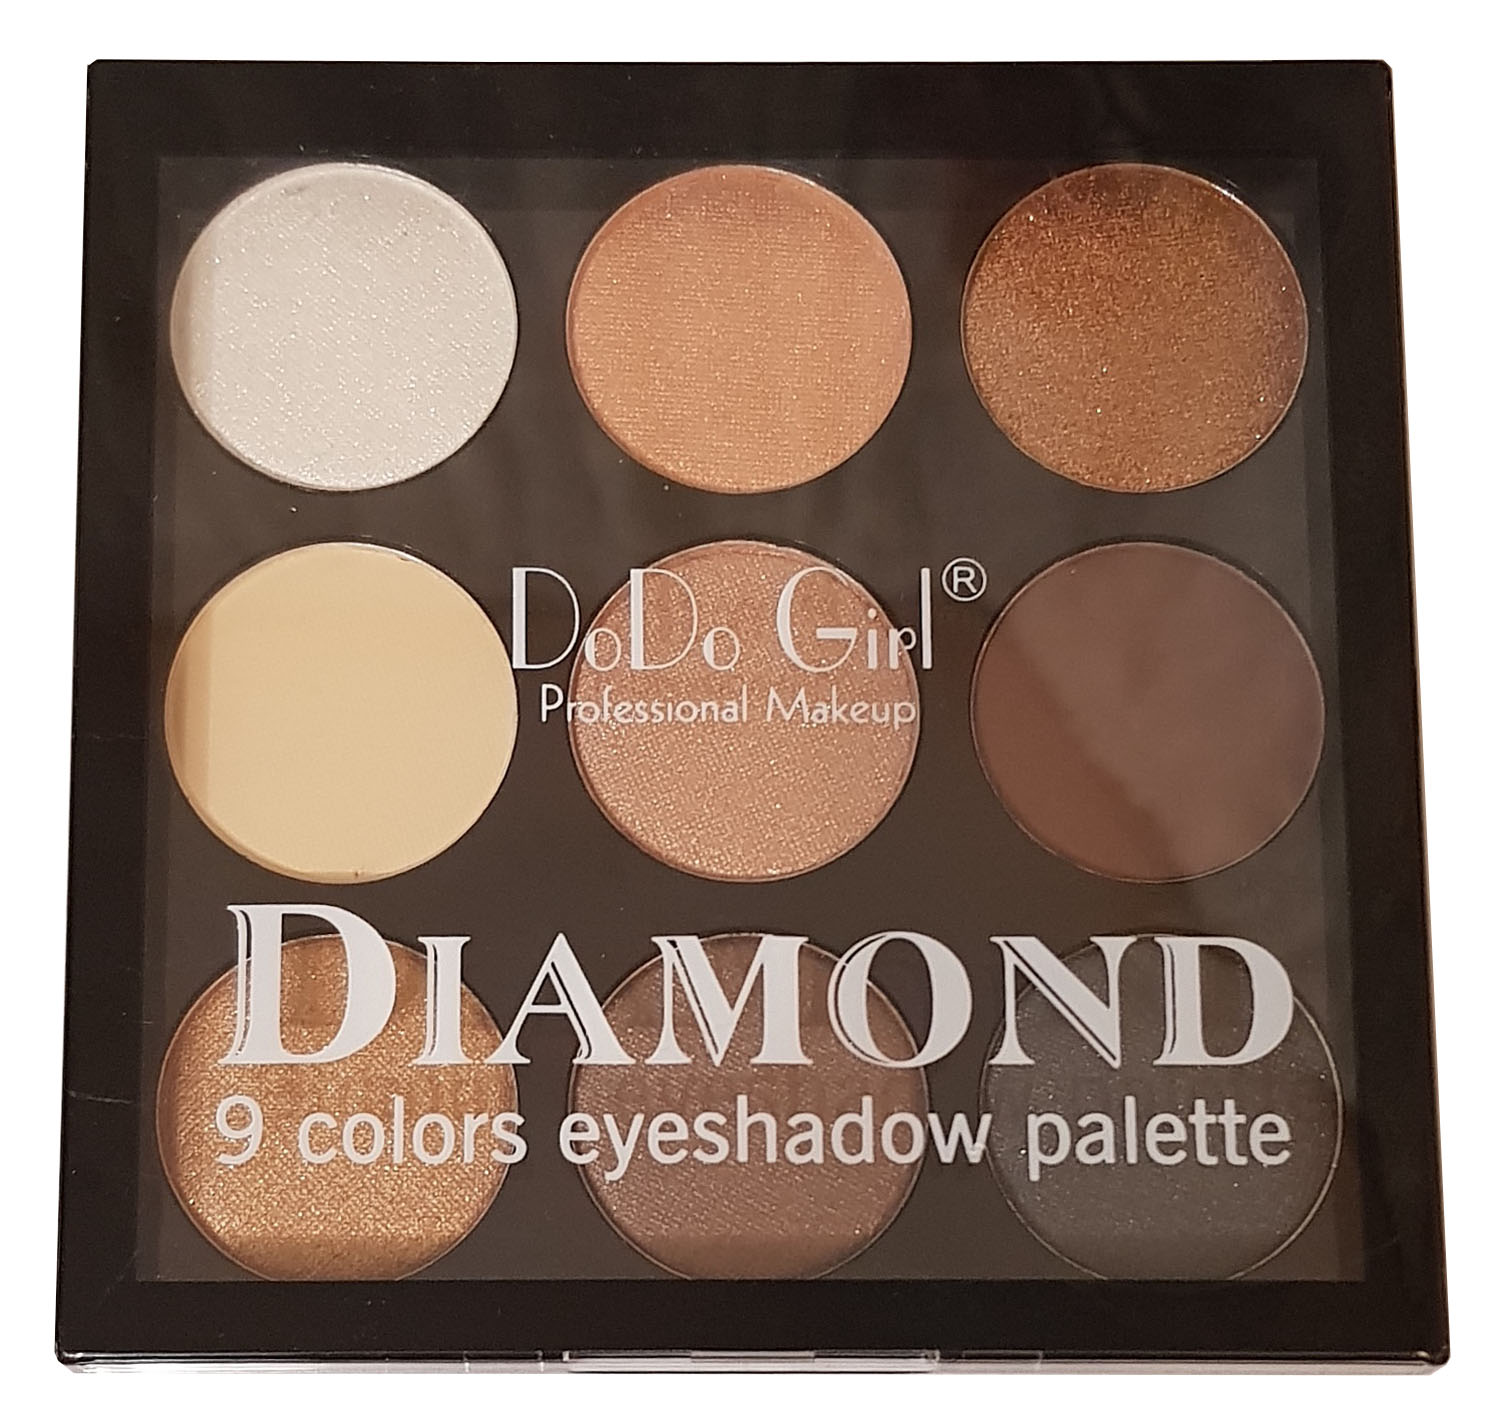 Палетка теней для глаз DoDo Girl Diamond Eyeshadow Palette, 9 оттенков, набор 03